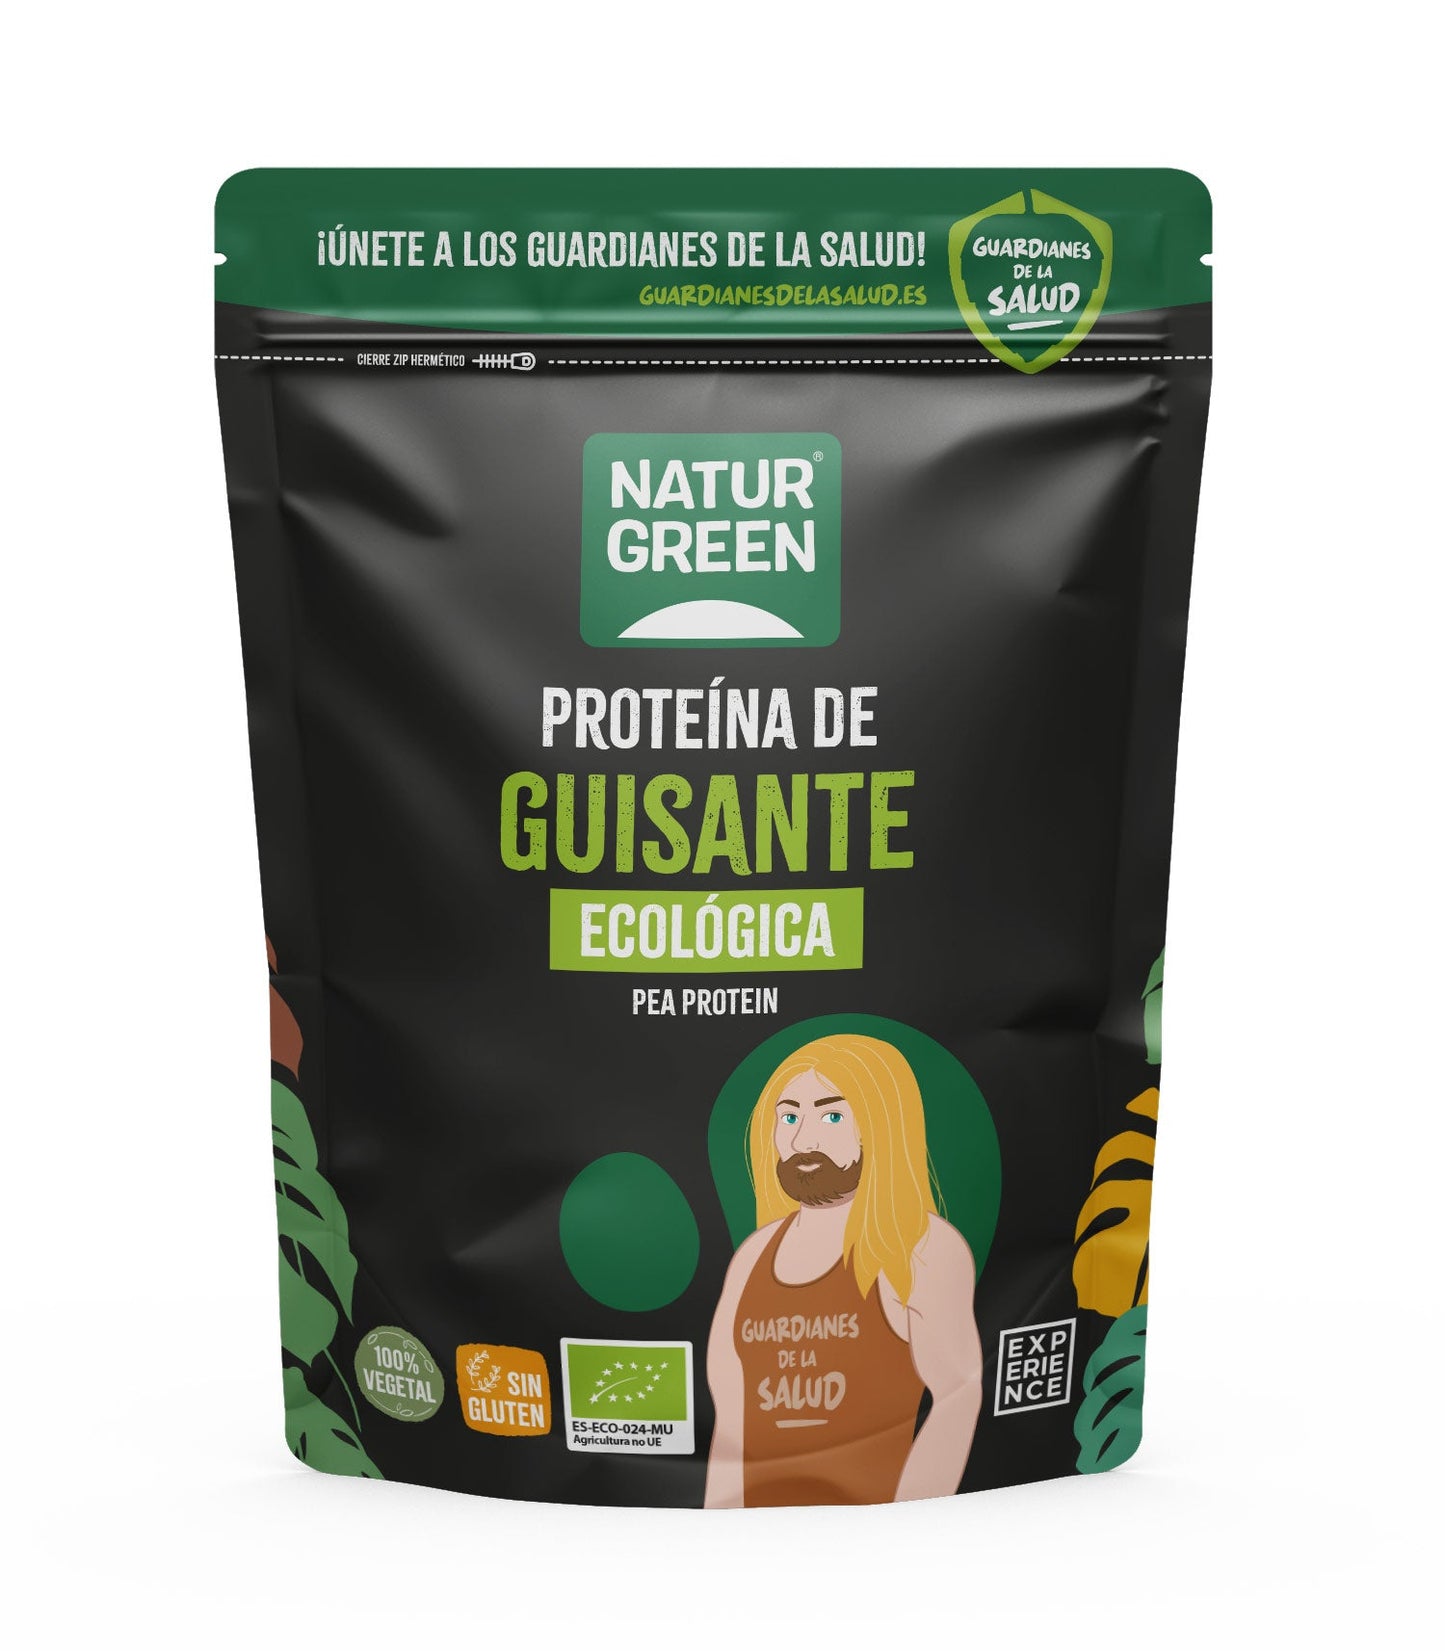 Pack 10x Proteína de Guisante Bio 400g NaturGreen